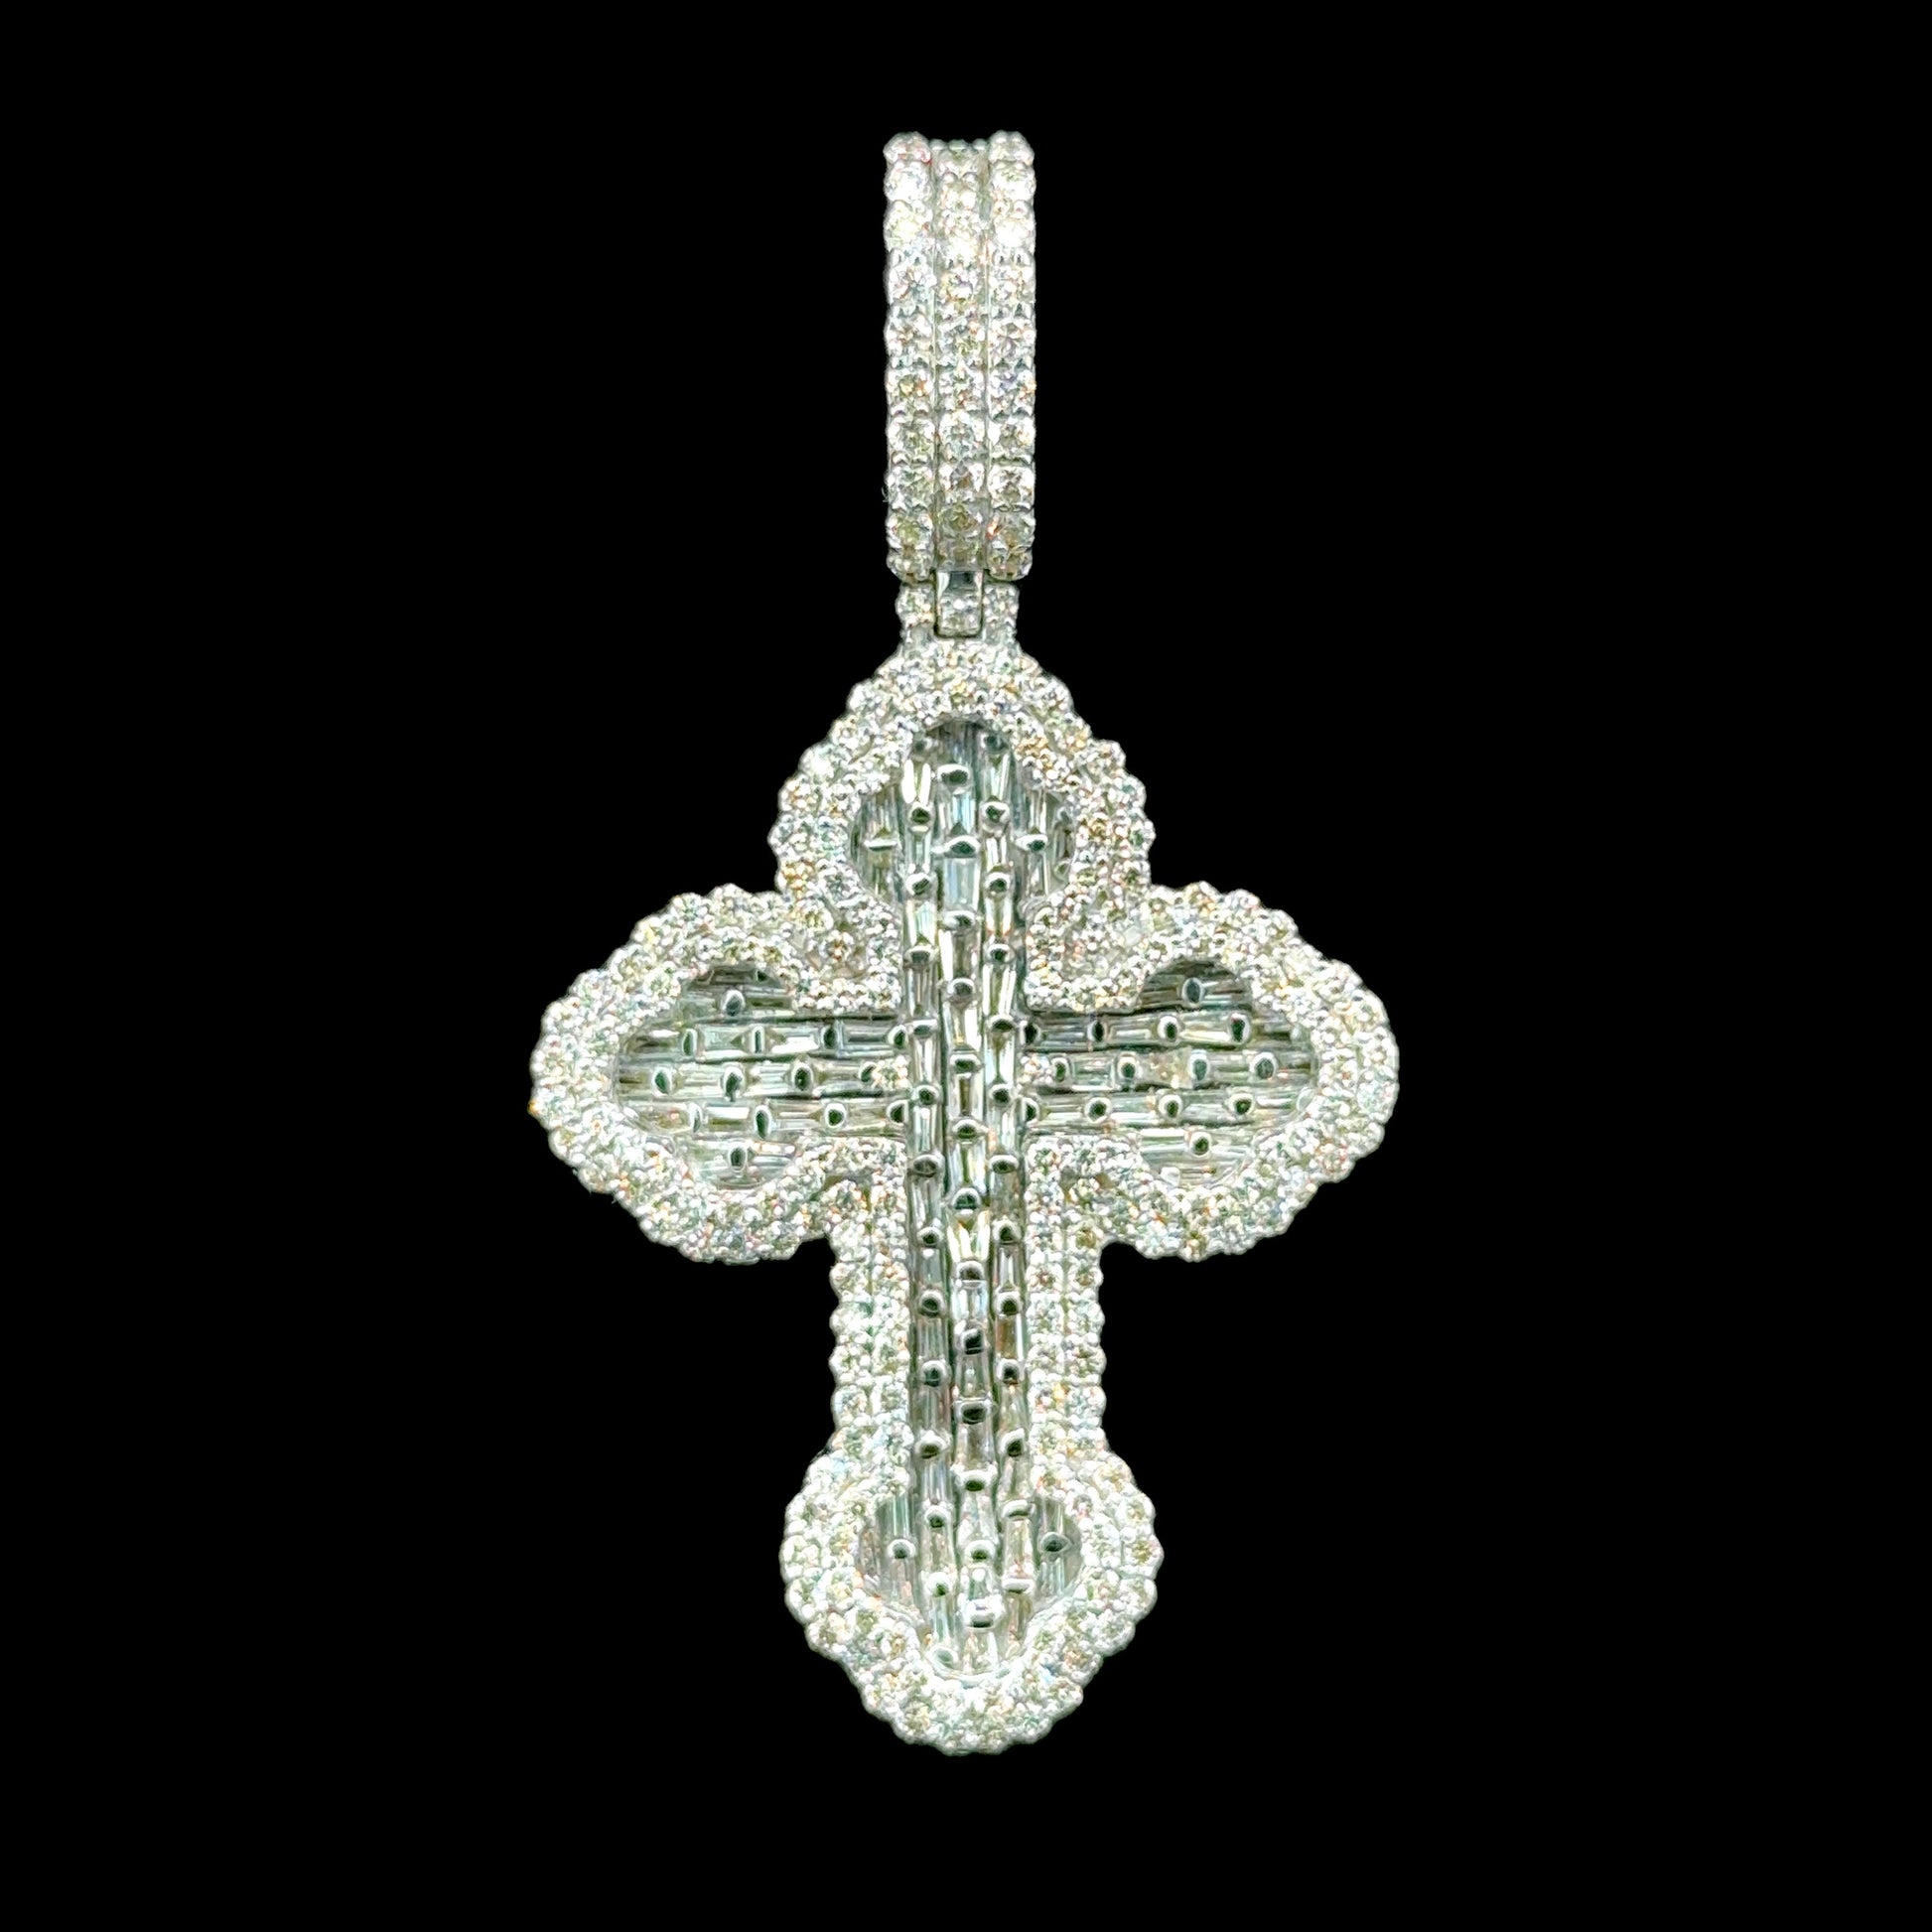 10K white gold diamond cross pendant showcasing 2.47 carats of sparkling diamonds.